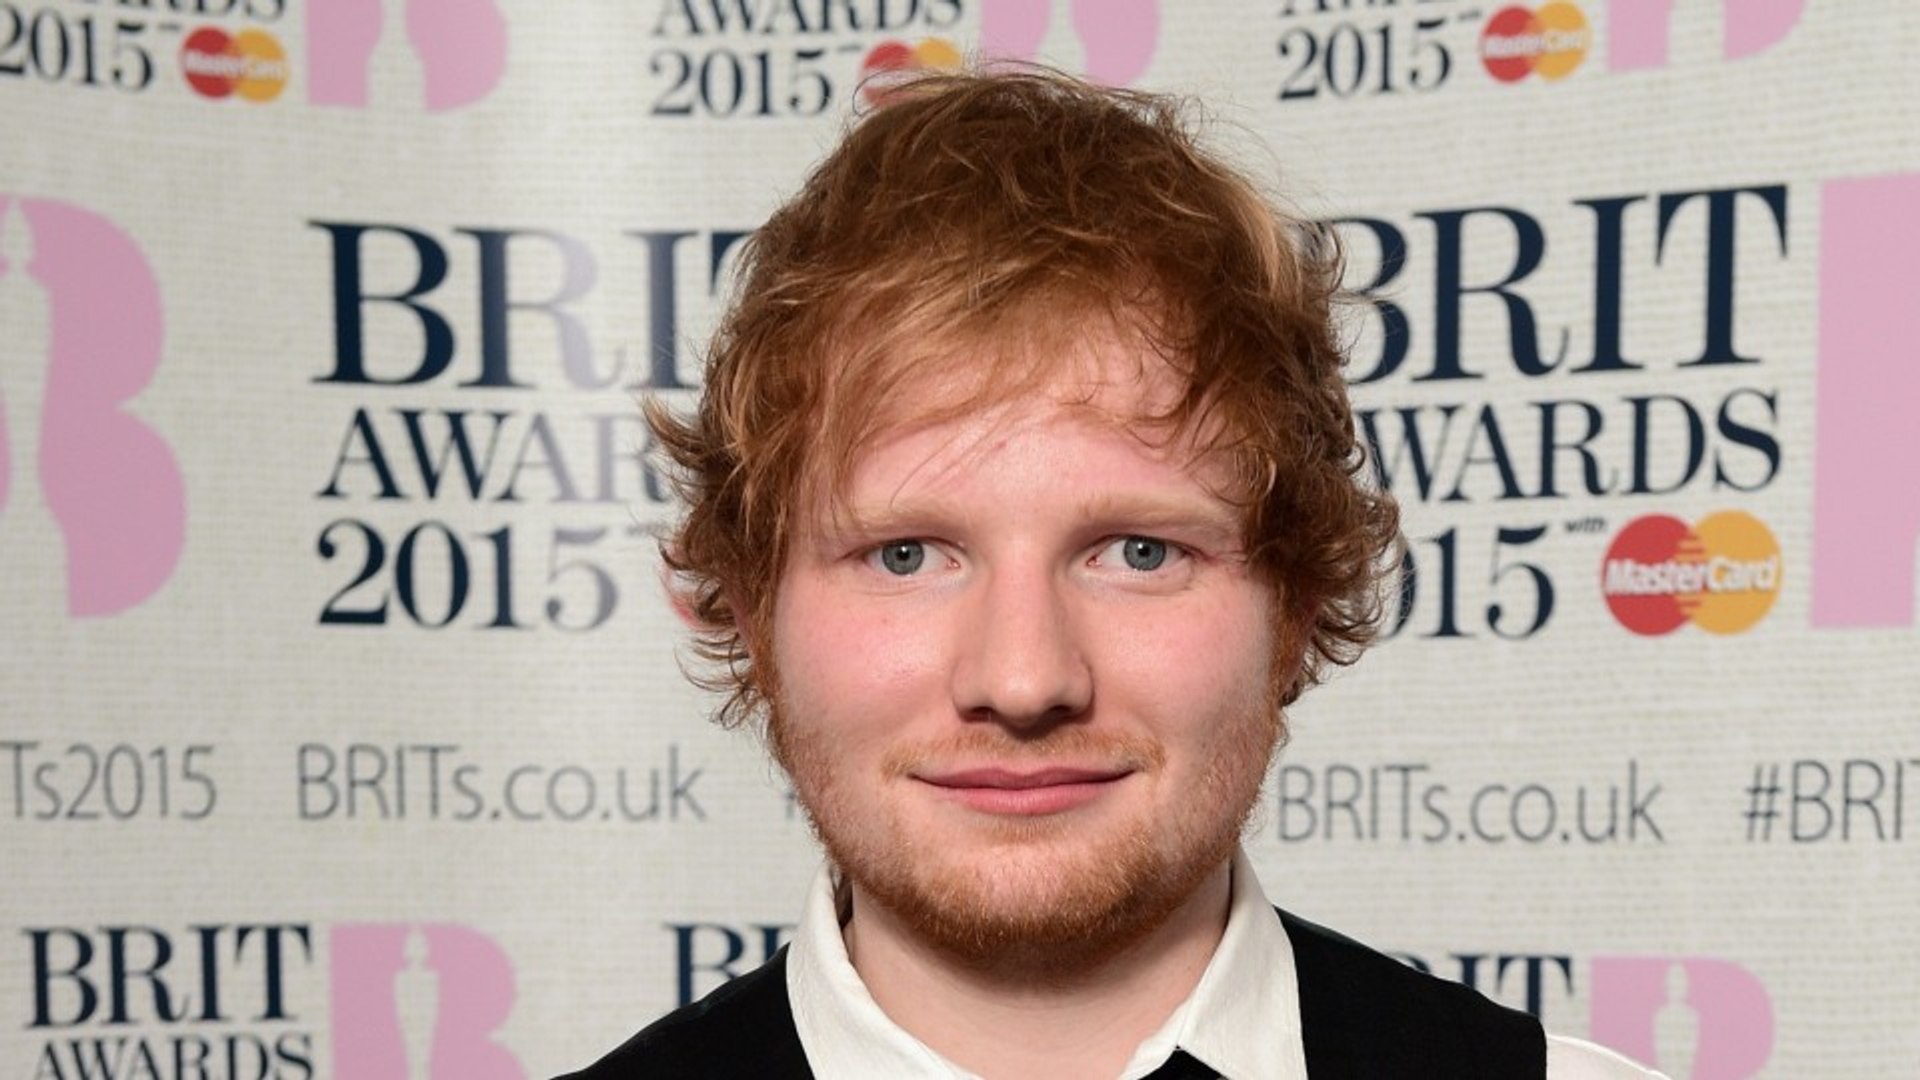 Ed Sheeran's New Album Smashes Records in the UK